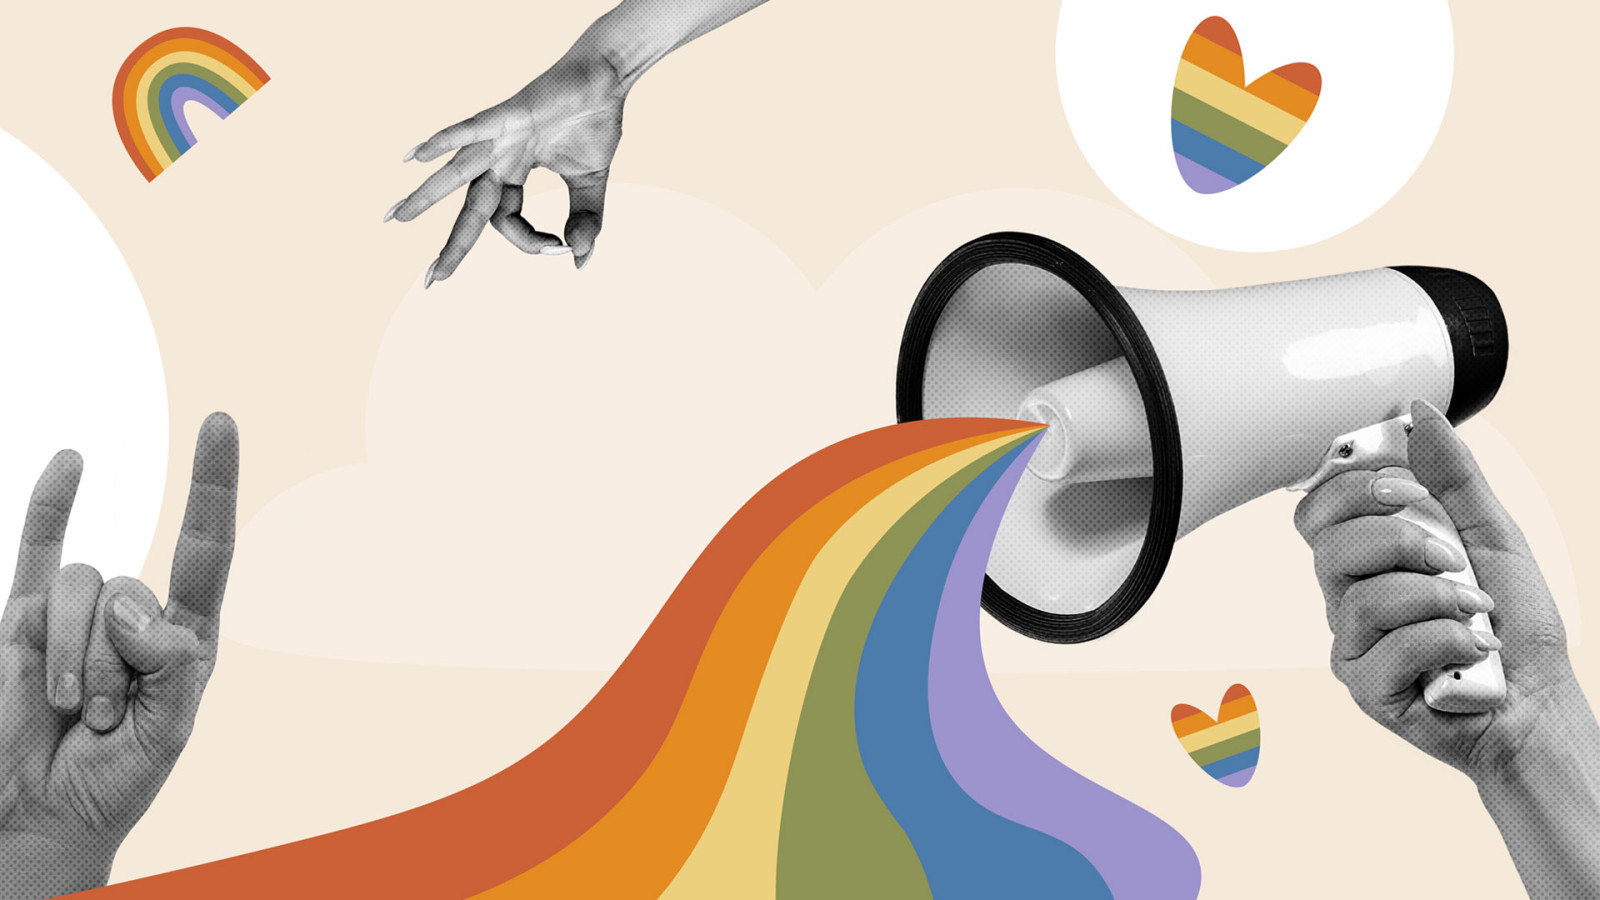 Conceptual social design with human hands,LGBTQ flags, loudspeaker